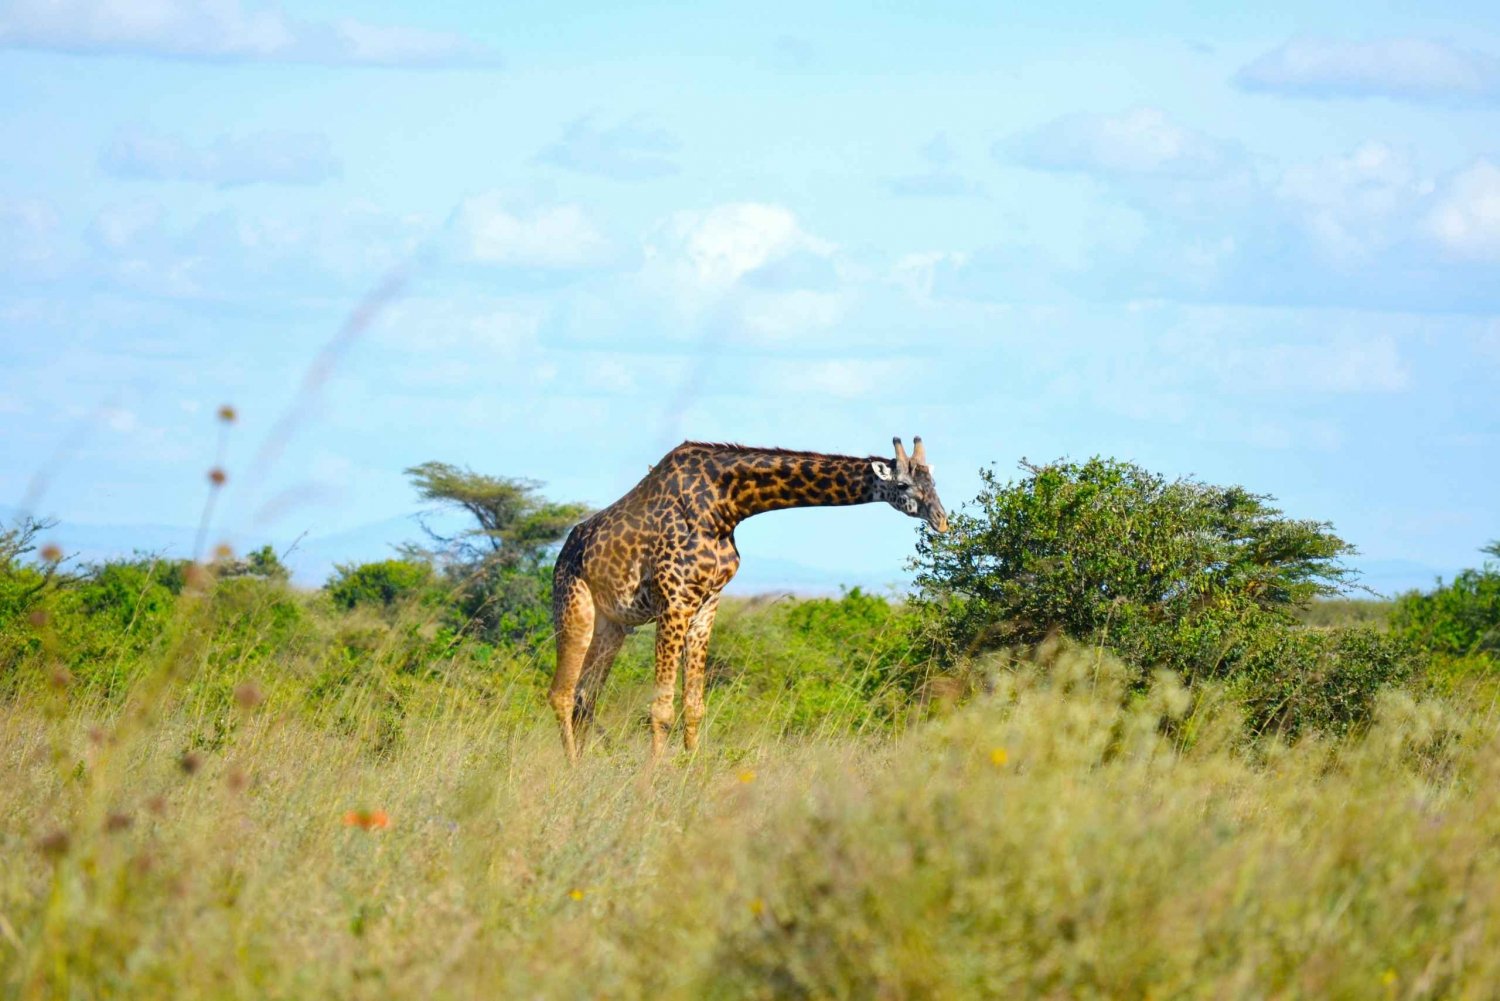 Nairobi: Visita al Parque Nacional por la mañana temprano o por la tarde